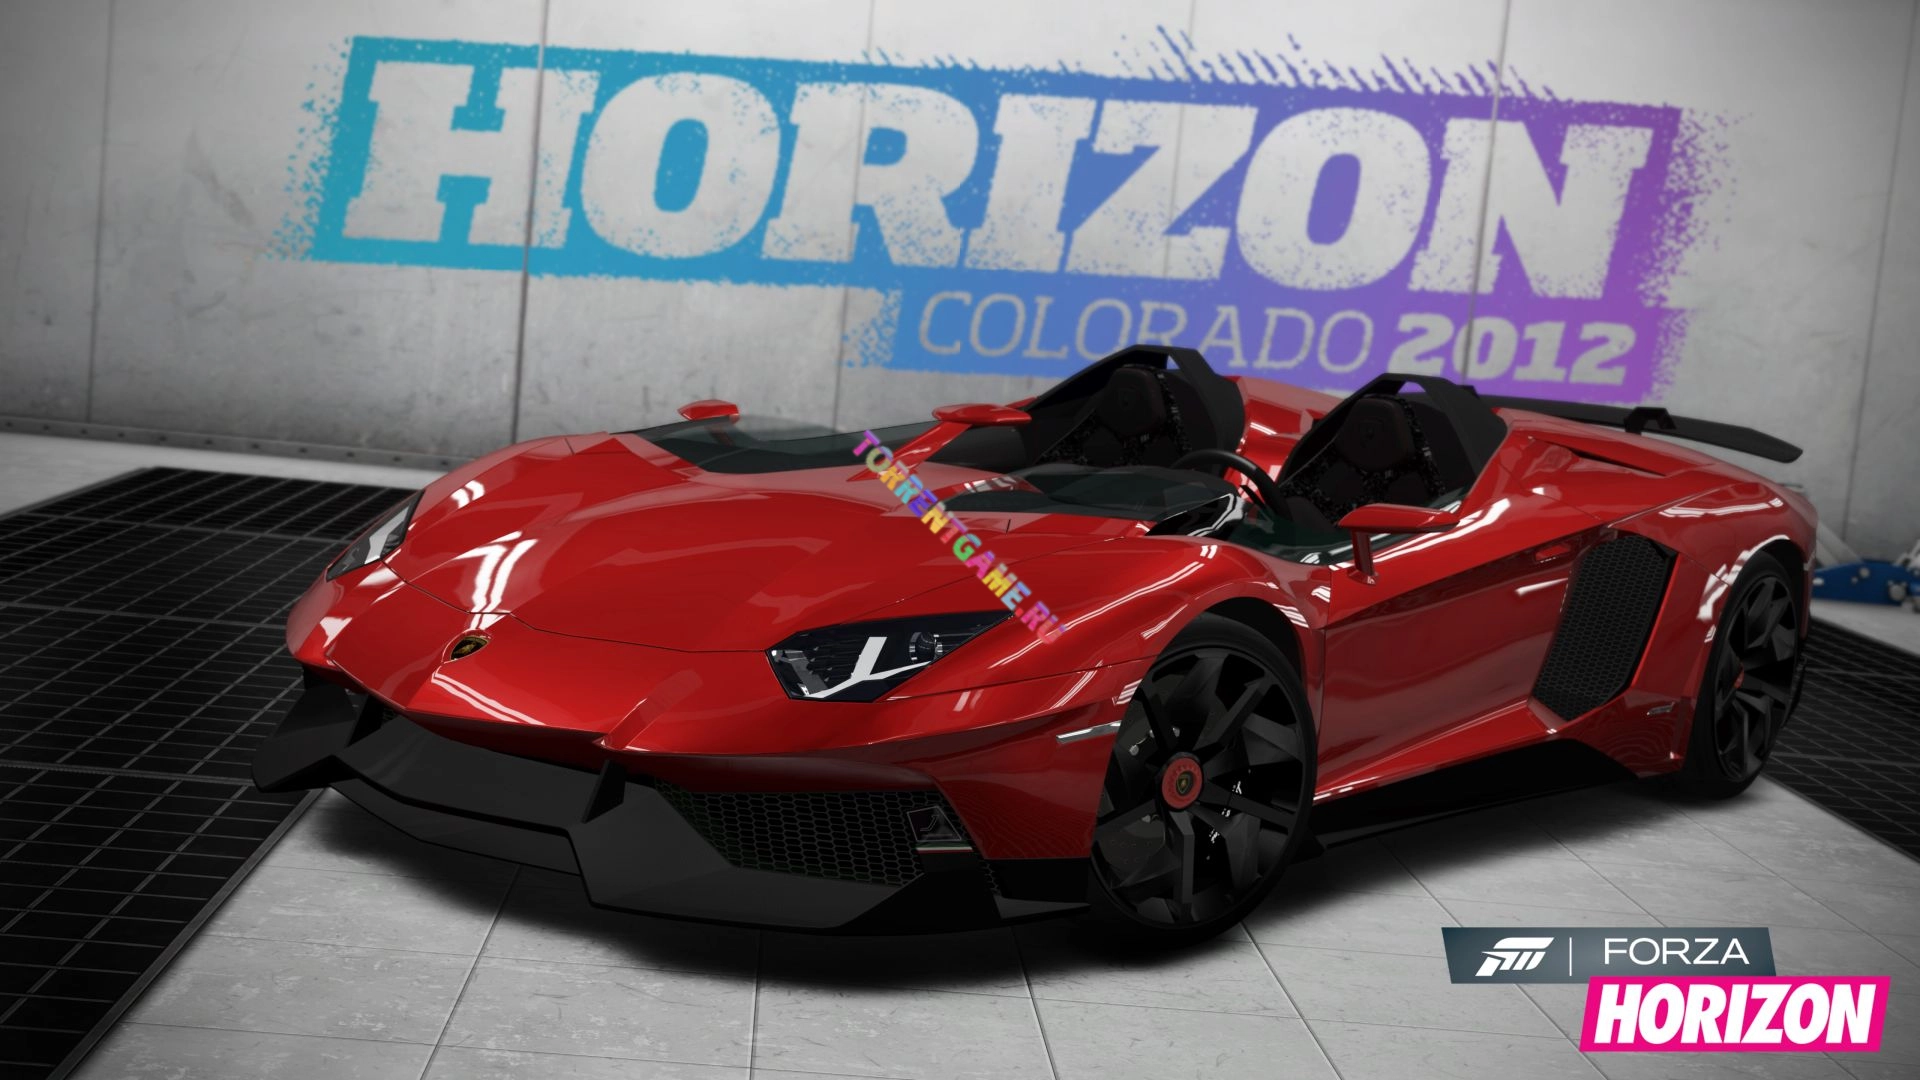 Forza Horizon Unicorn & Barn Cars Limited Collector's Edition